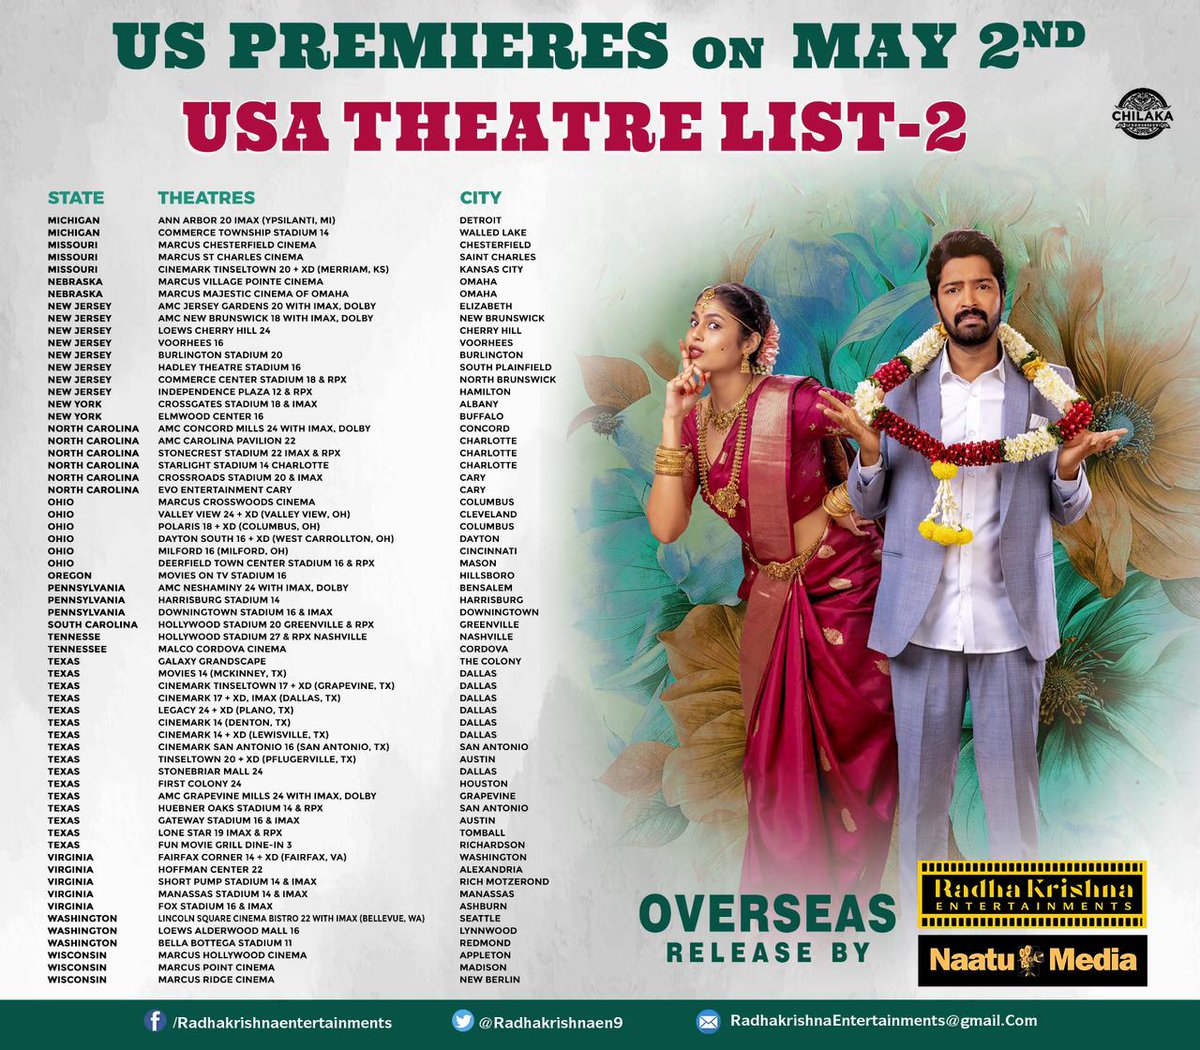 USA Theatre List of #AaOkkatiAdakku 

Premieres from May 2nd

Overseas Release  by @Radhakrishnaen9 @NaatuMedia 

@allarinaresh @fariaabdullah2 @RajivChilaka @harshachemudu @ariyanaglory @GopiSundarOffl @dopSURYAA @ChotaKPrasad @abburiravi @blaxmipati @RajivChilaka

PRO